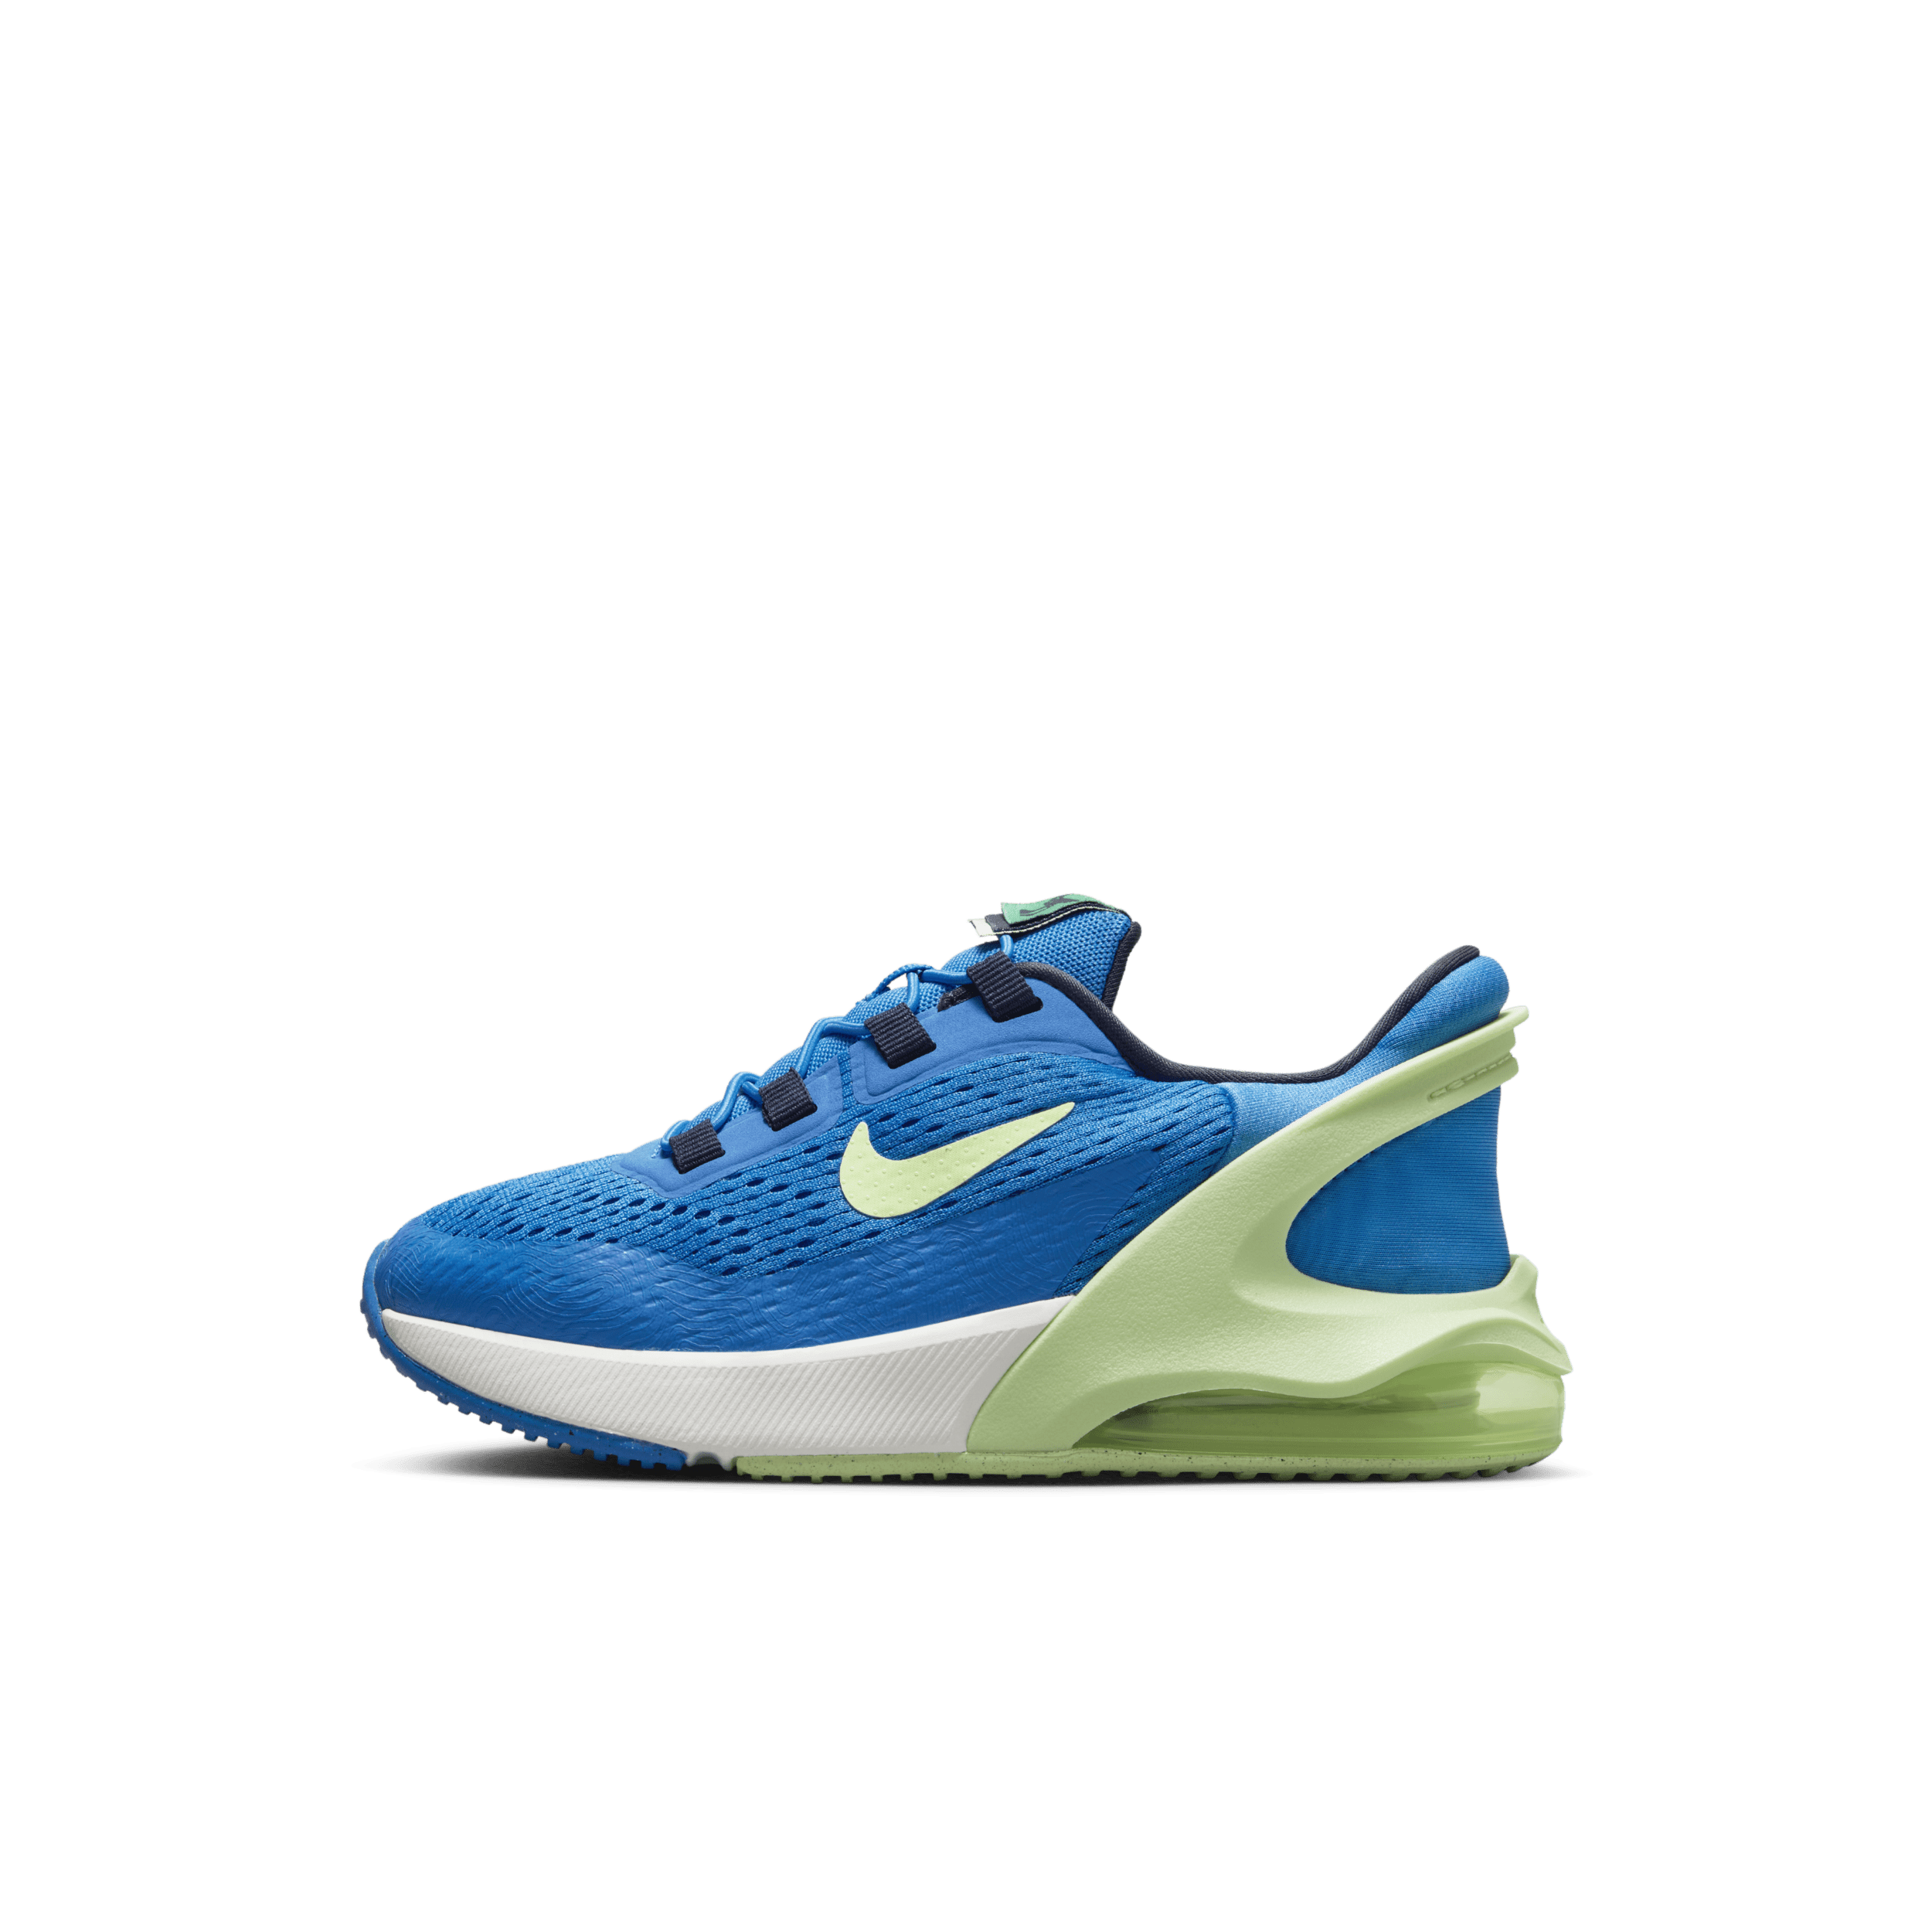 Scarpa facile da indossare Nike Air Max 270 Go – Bambino/a - Blu